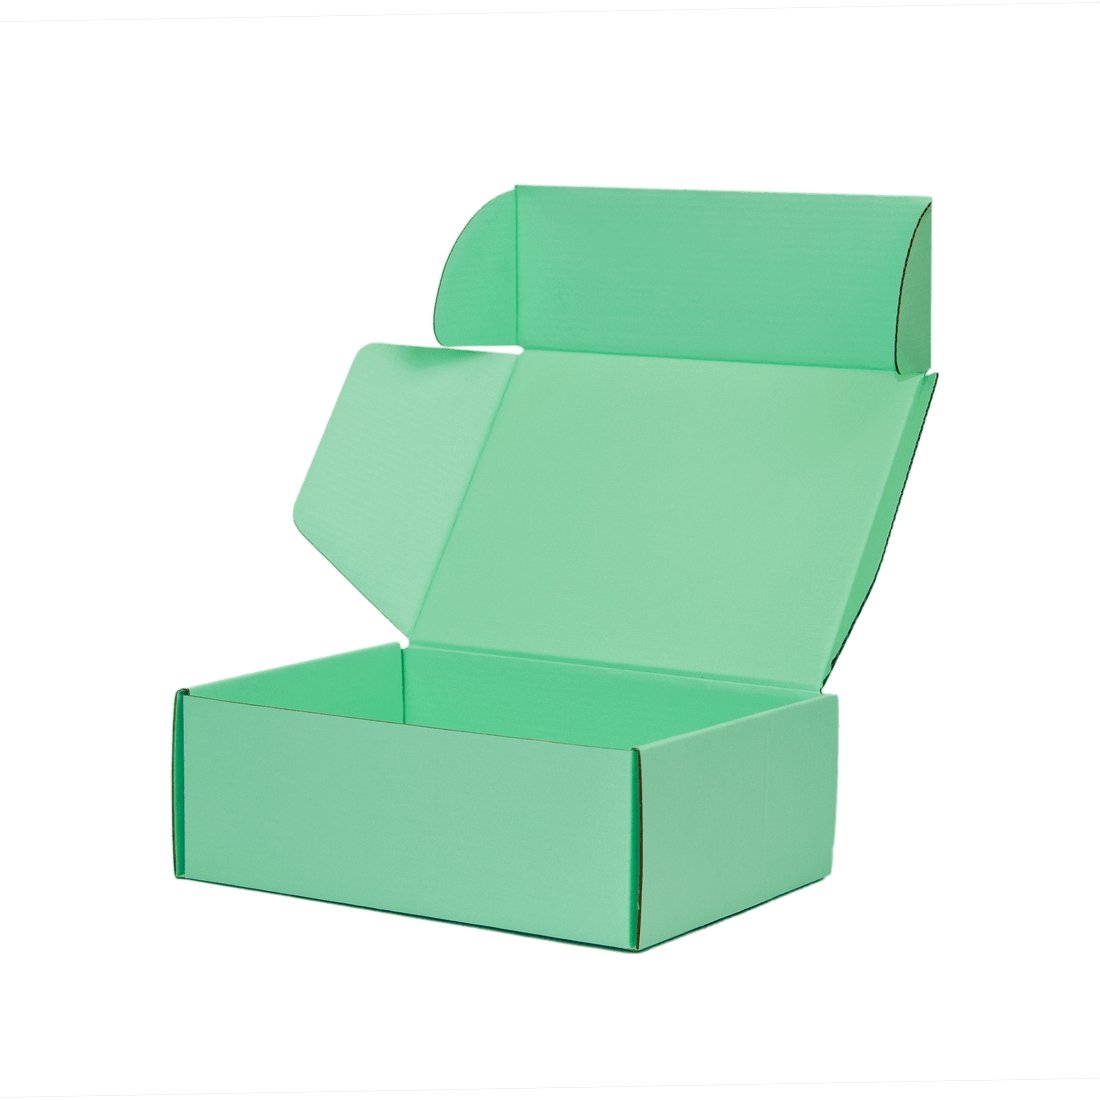 Premium Light Green 310 x 230 x 105mm Tuck Mailing Box